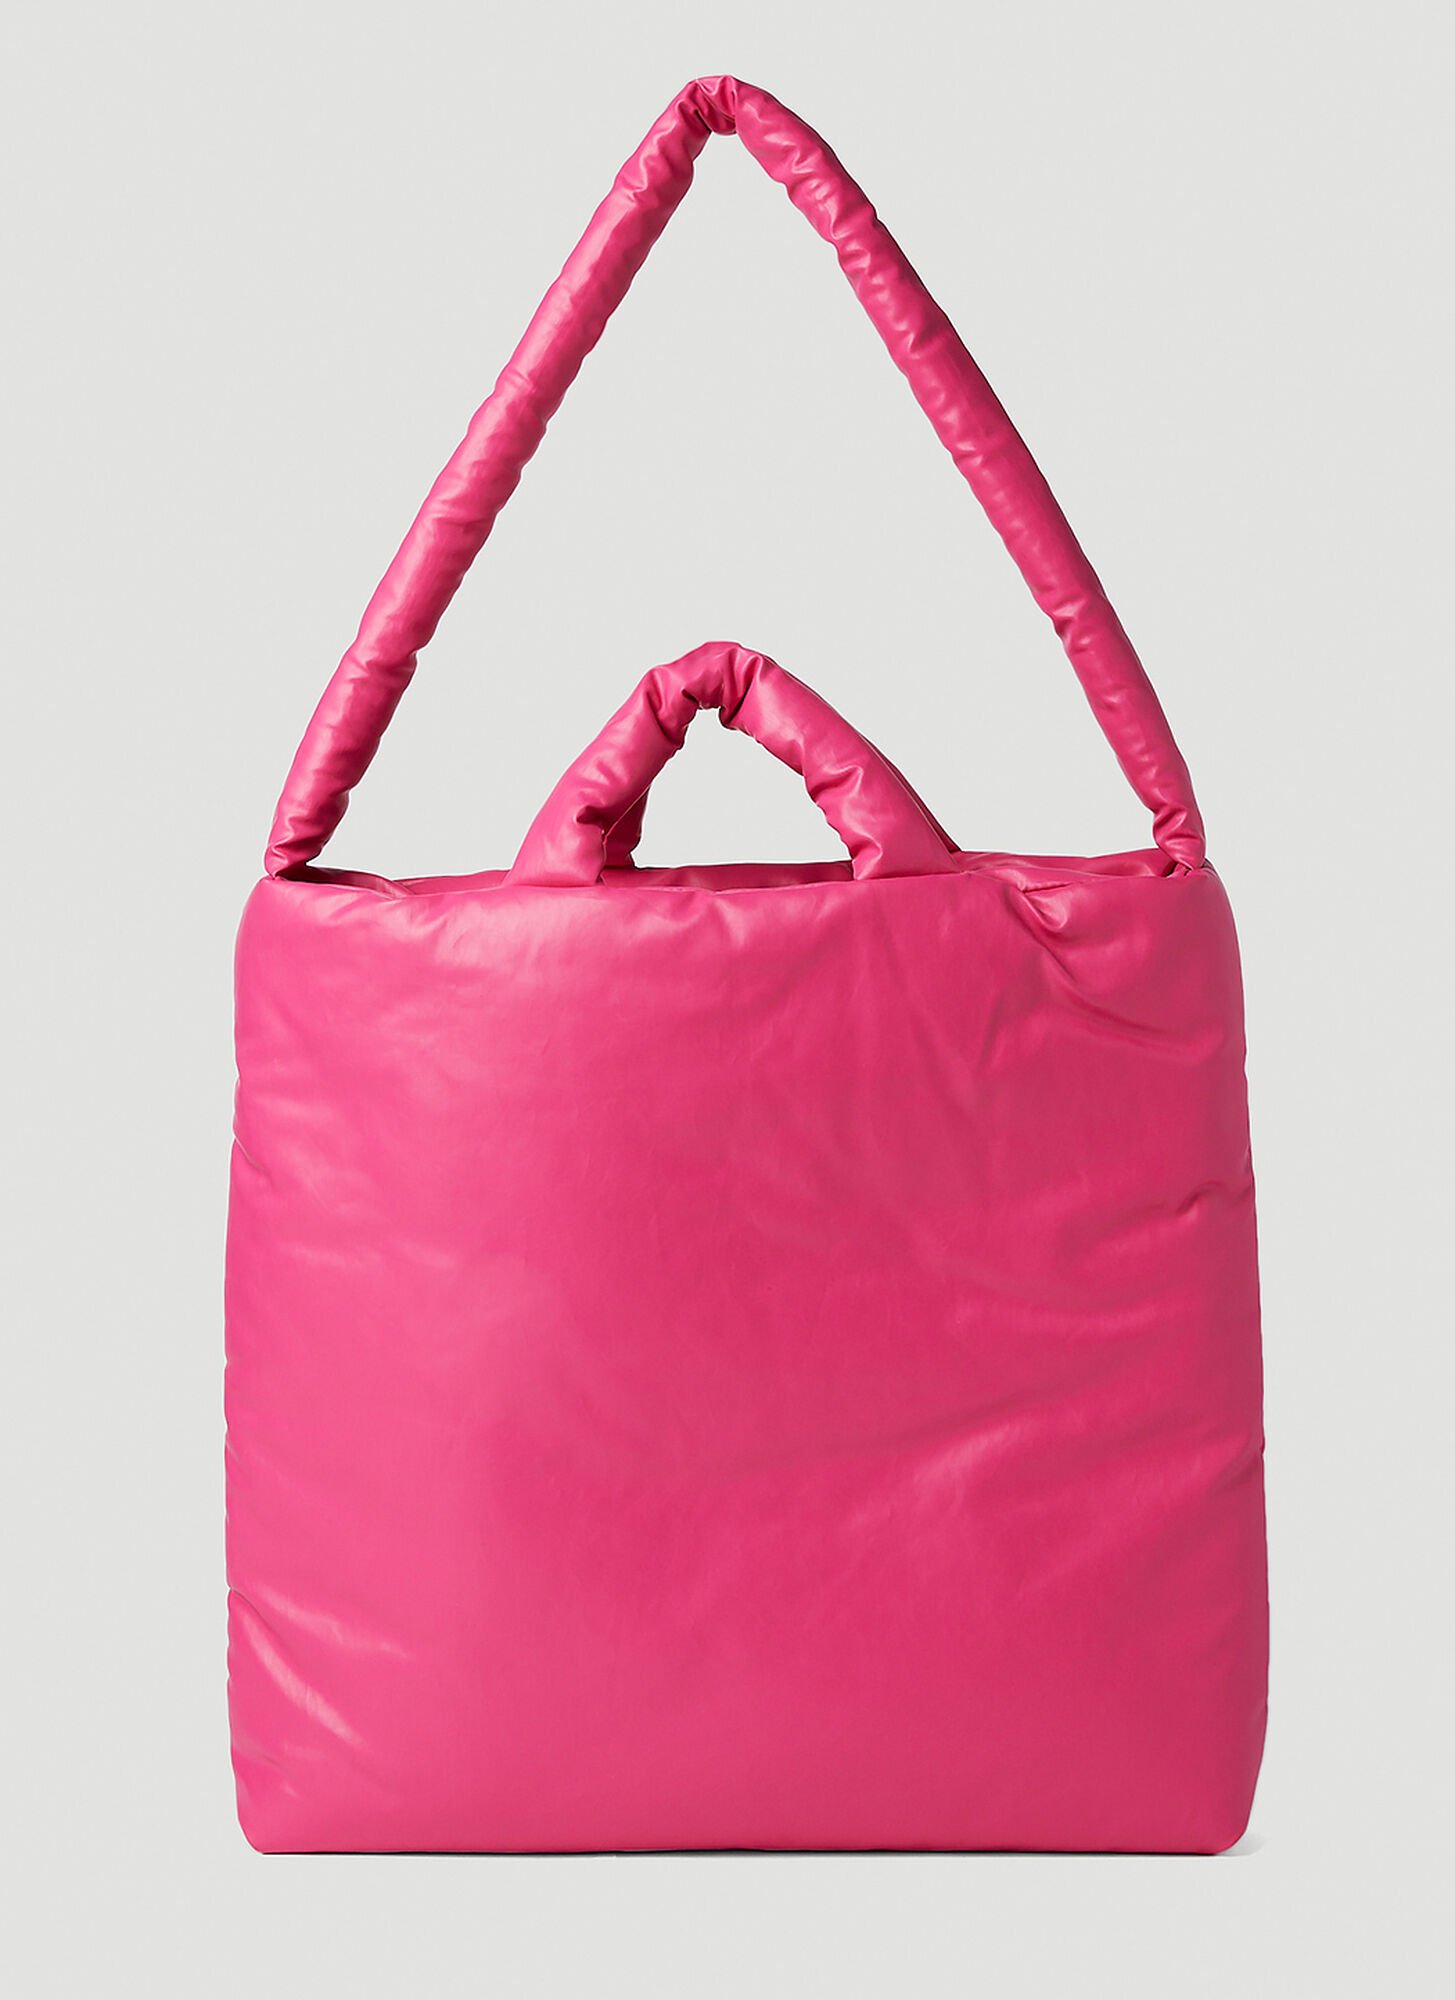 Kassl Editions Pillow Oil Medium Tote Bag In Pink